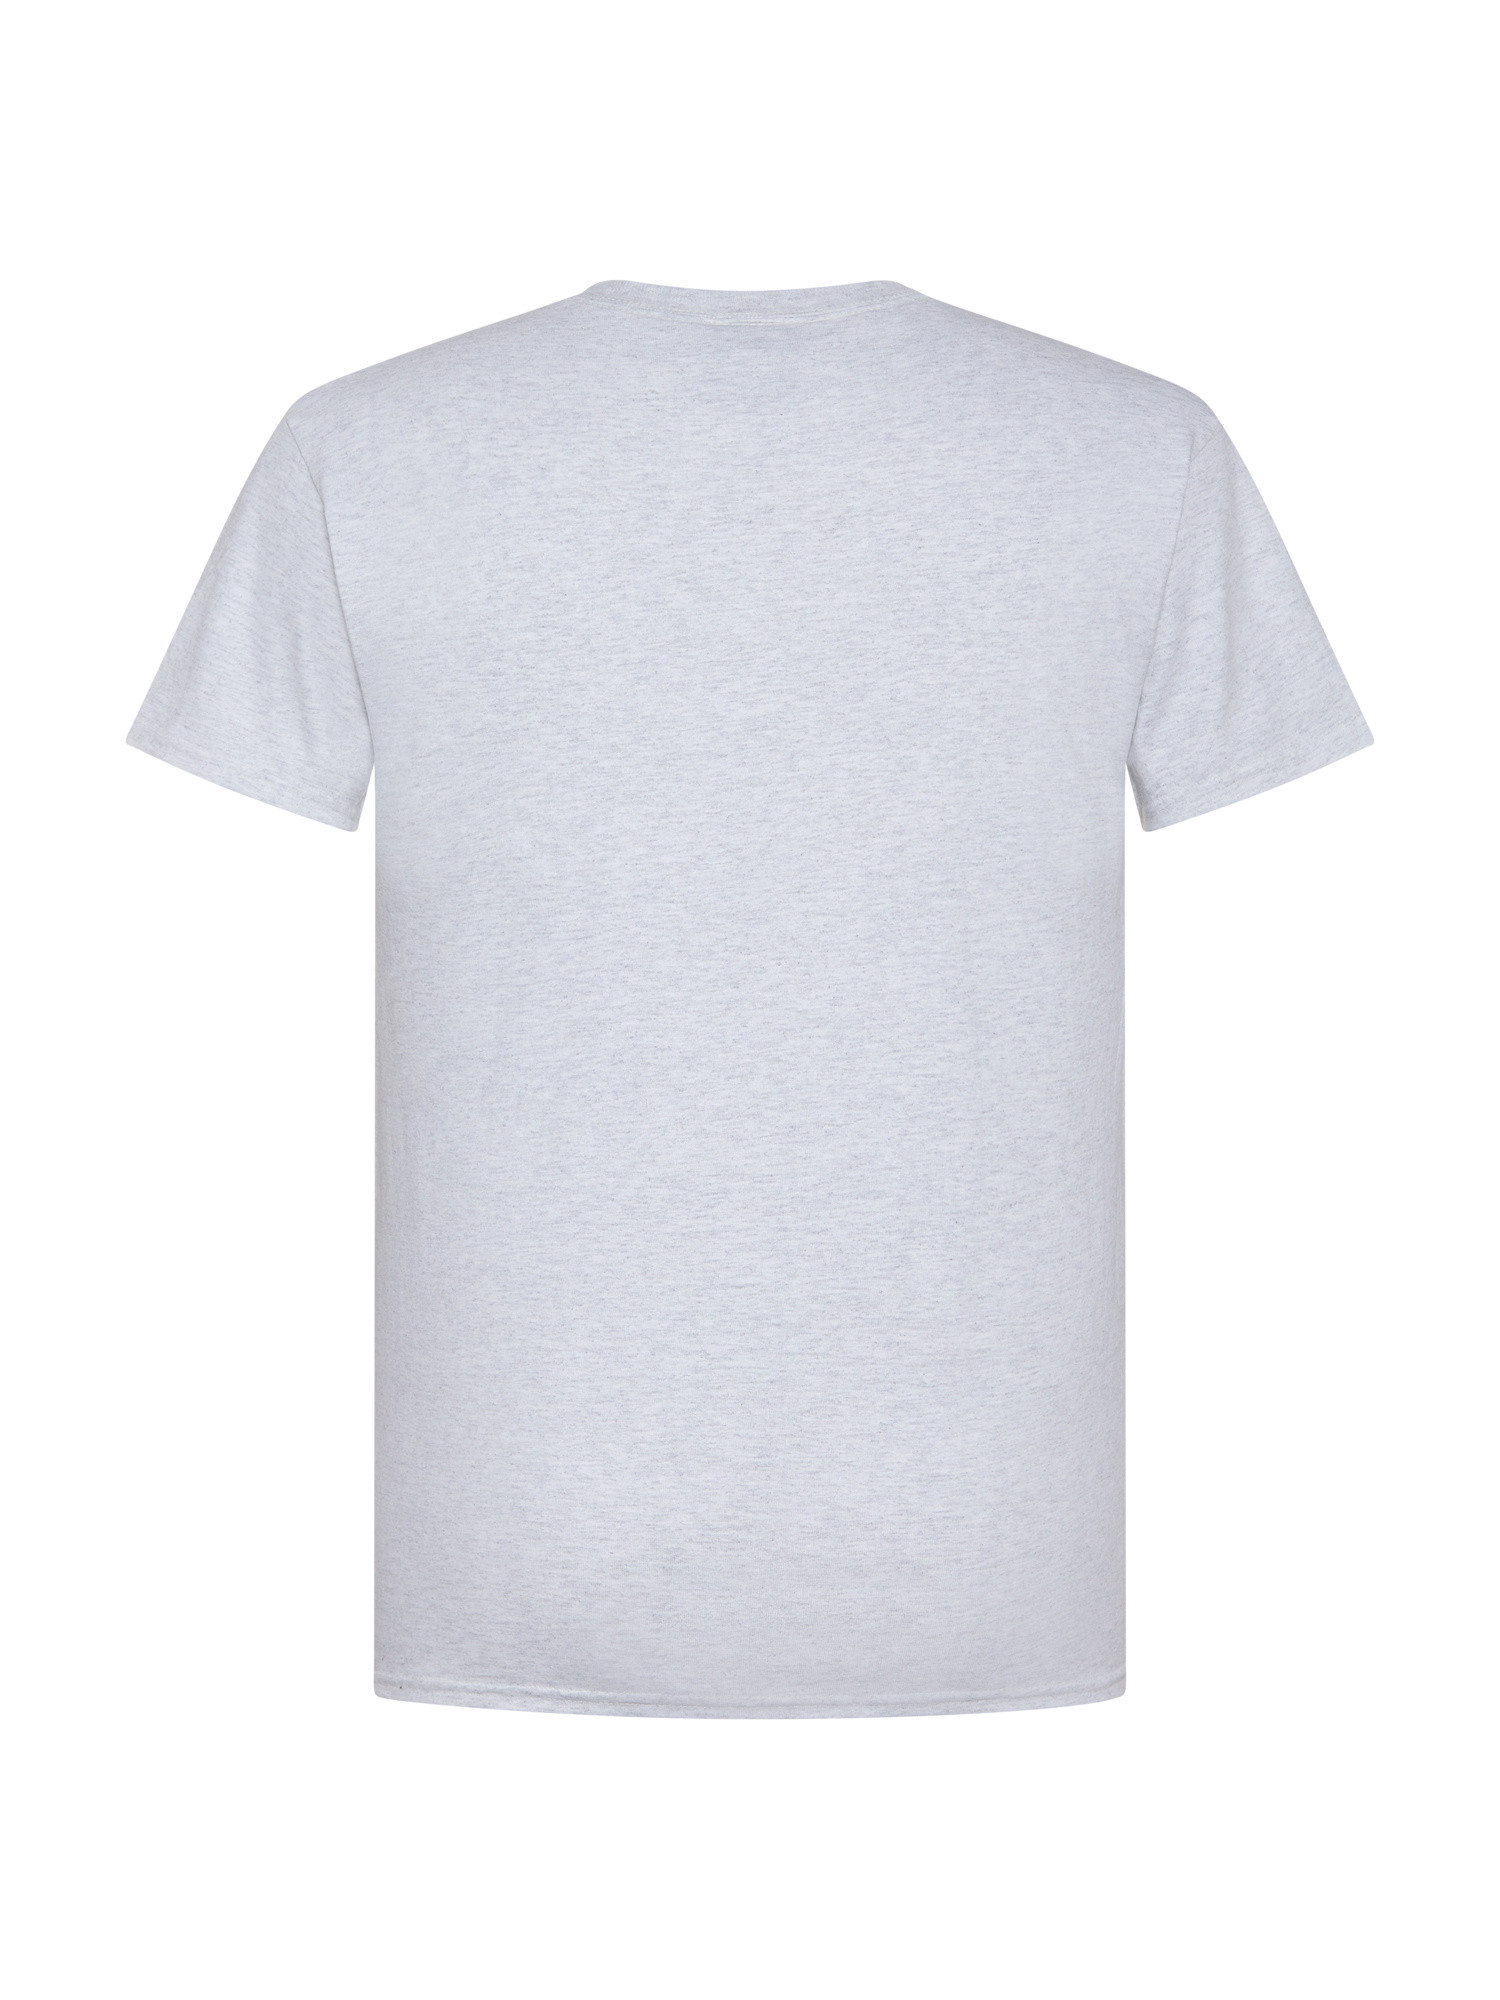 Thrasher - T-Shirt con stampa, Grigio chiaro, large image number 1